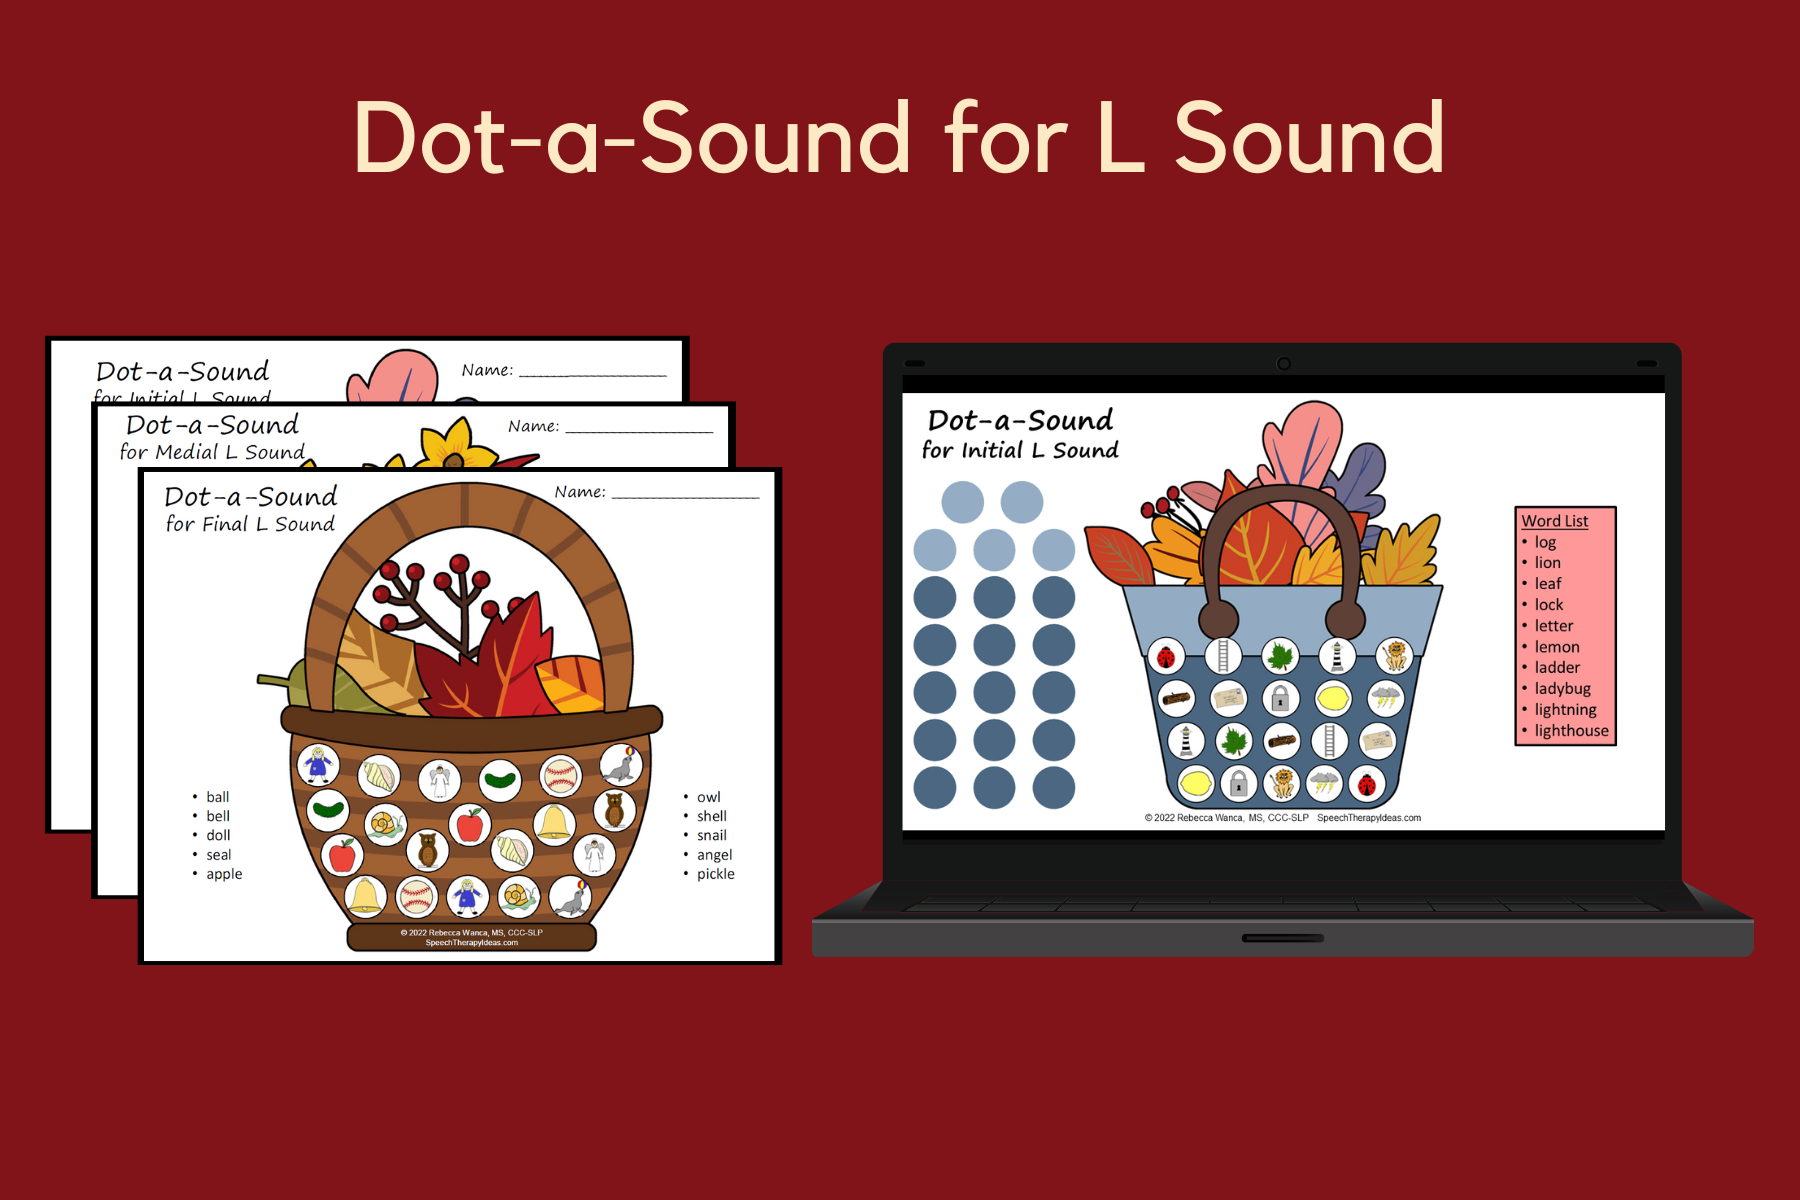 Dot-a-Sound for L Sound